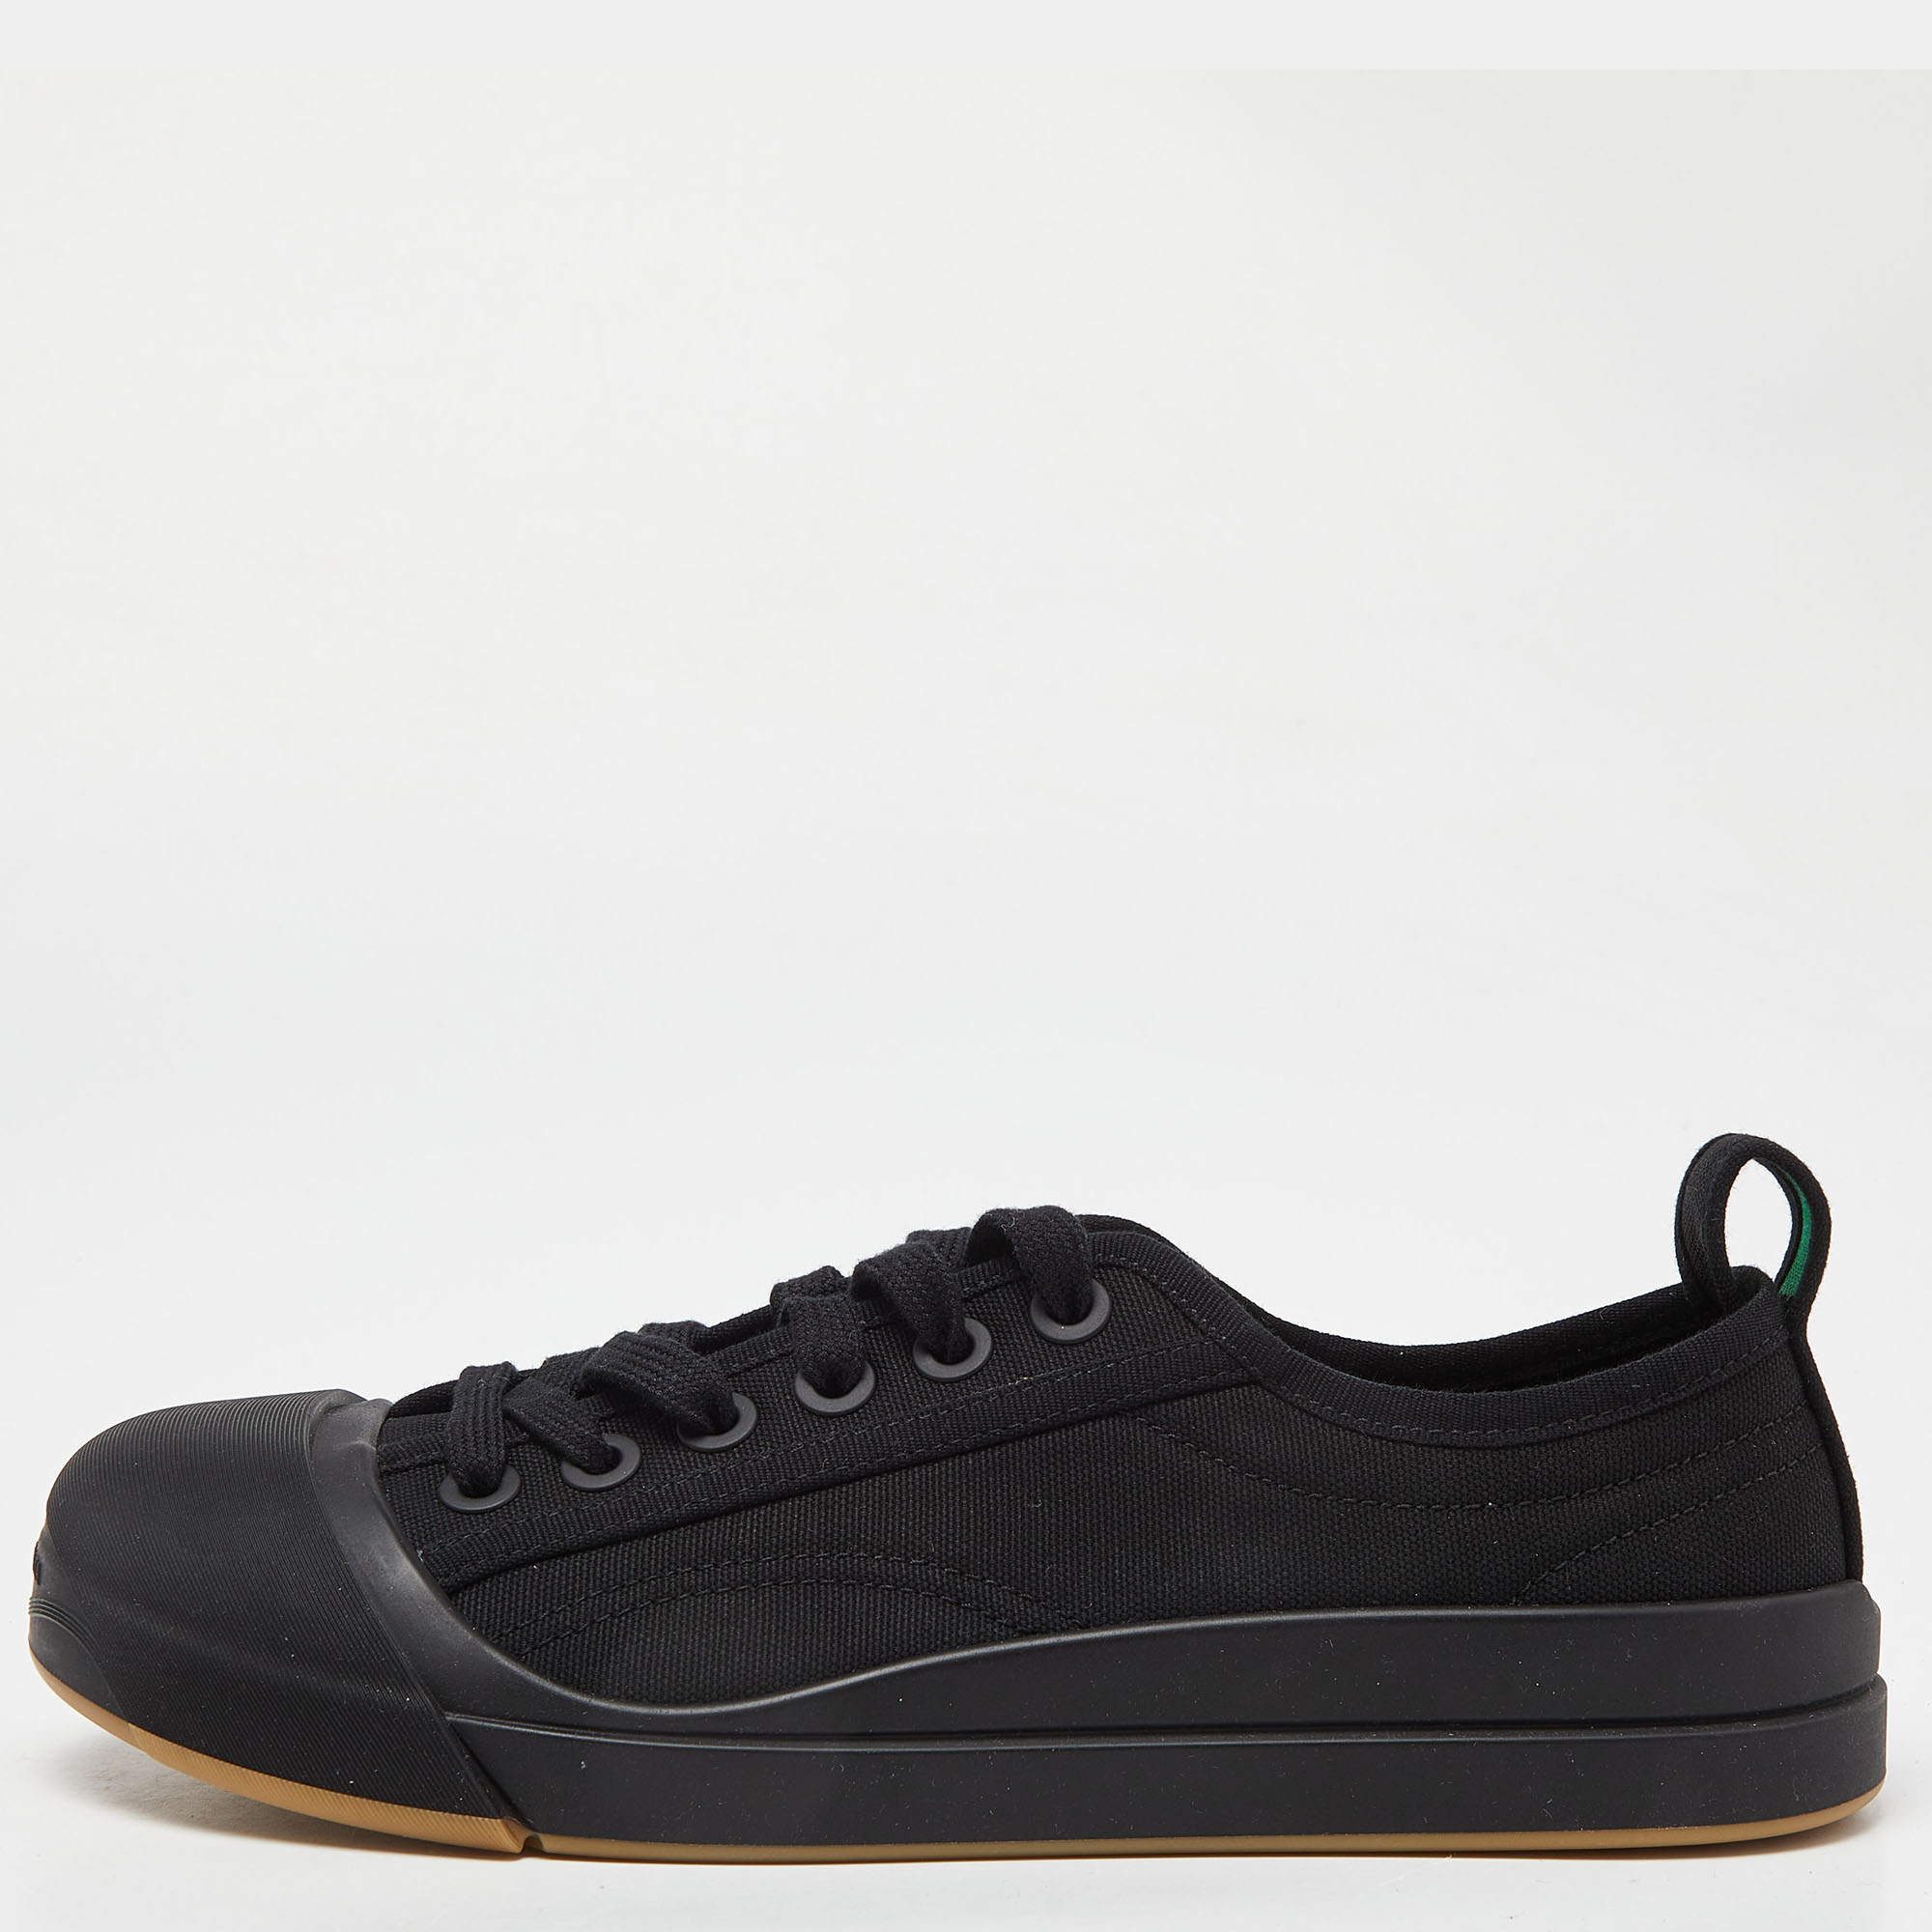 Bottega veneta black canvas and leather vulcan low top sneakers size 38.5